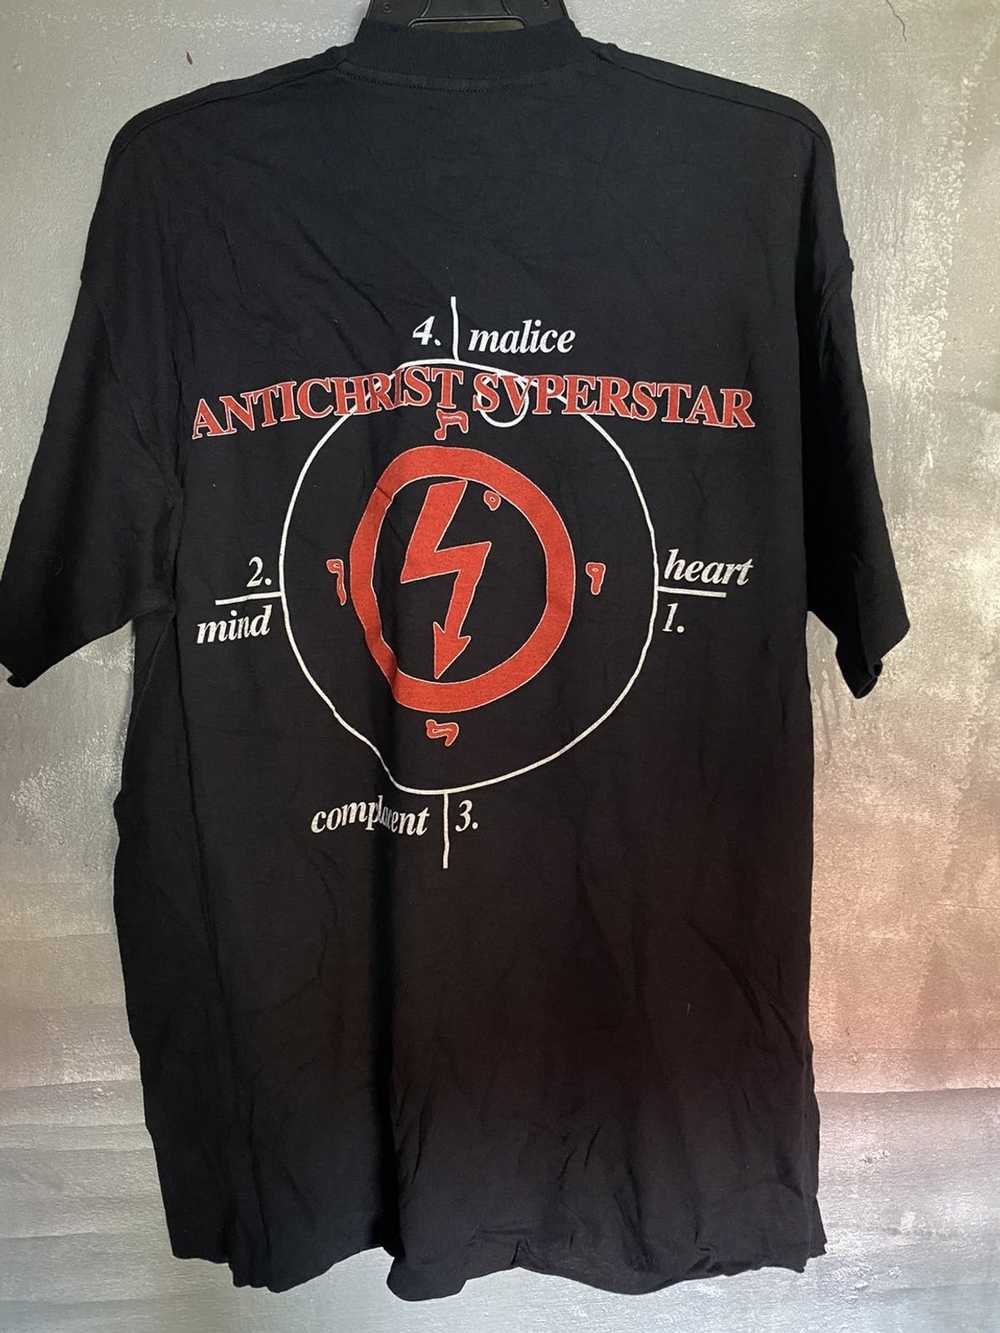 Band Tees × Rock T Shirt Vintage Marilyn Manson - image 2